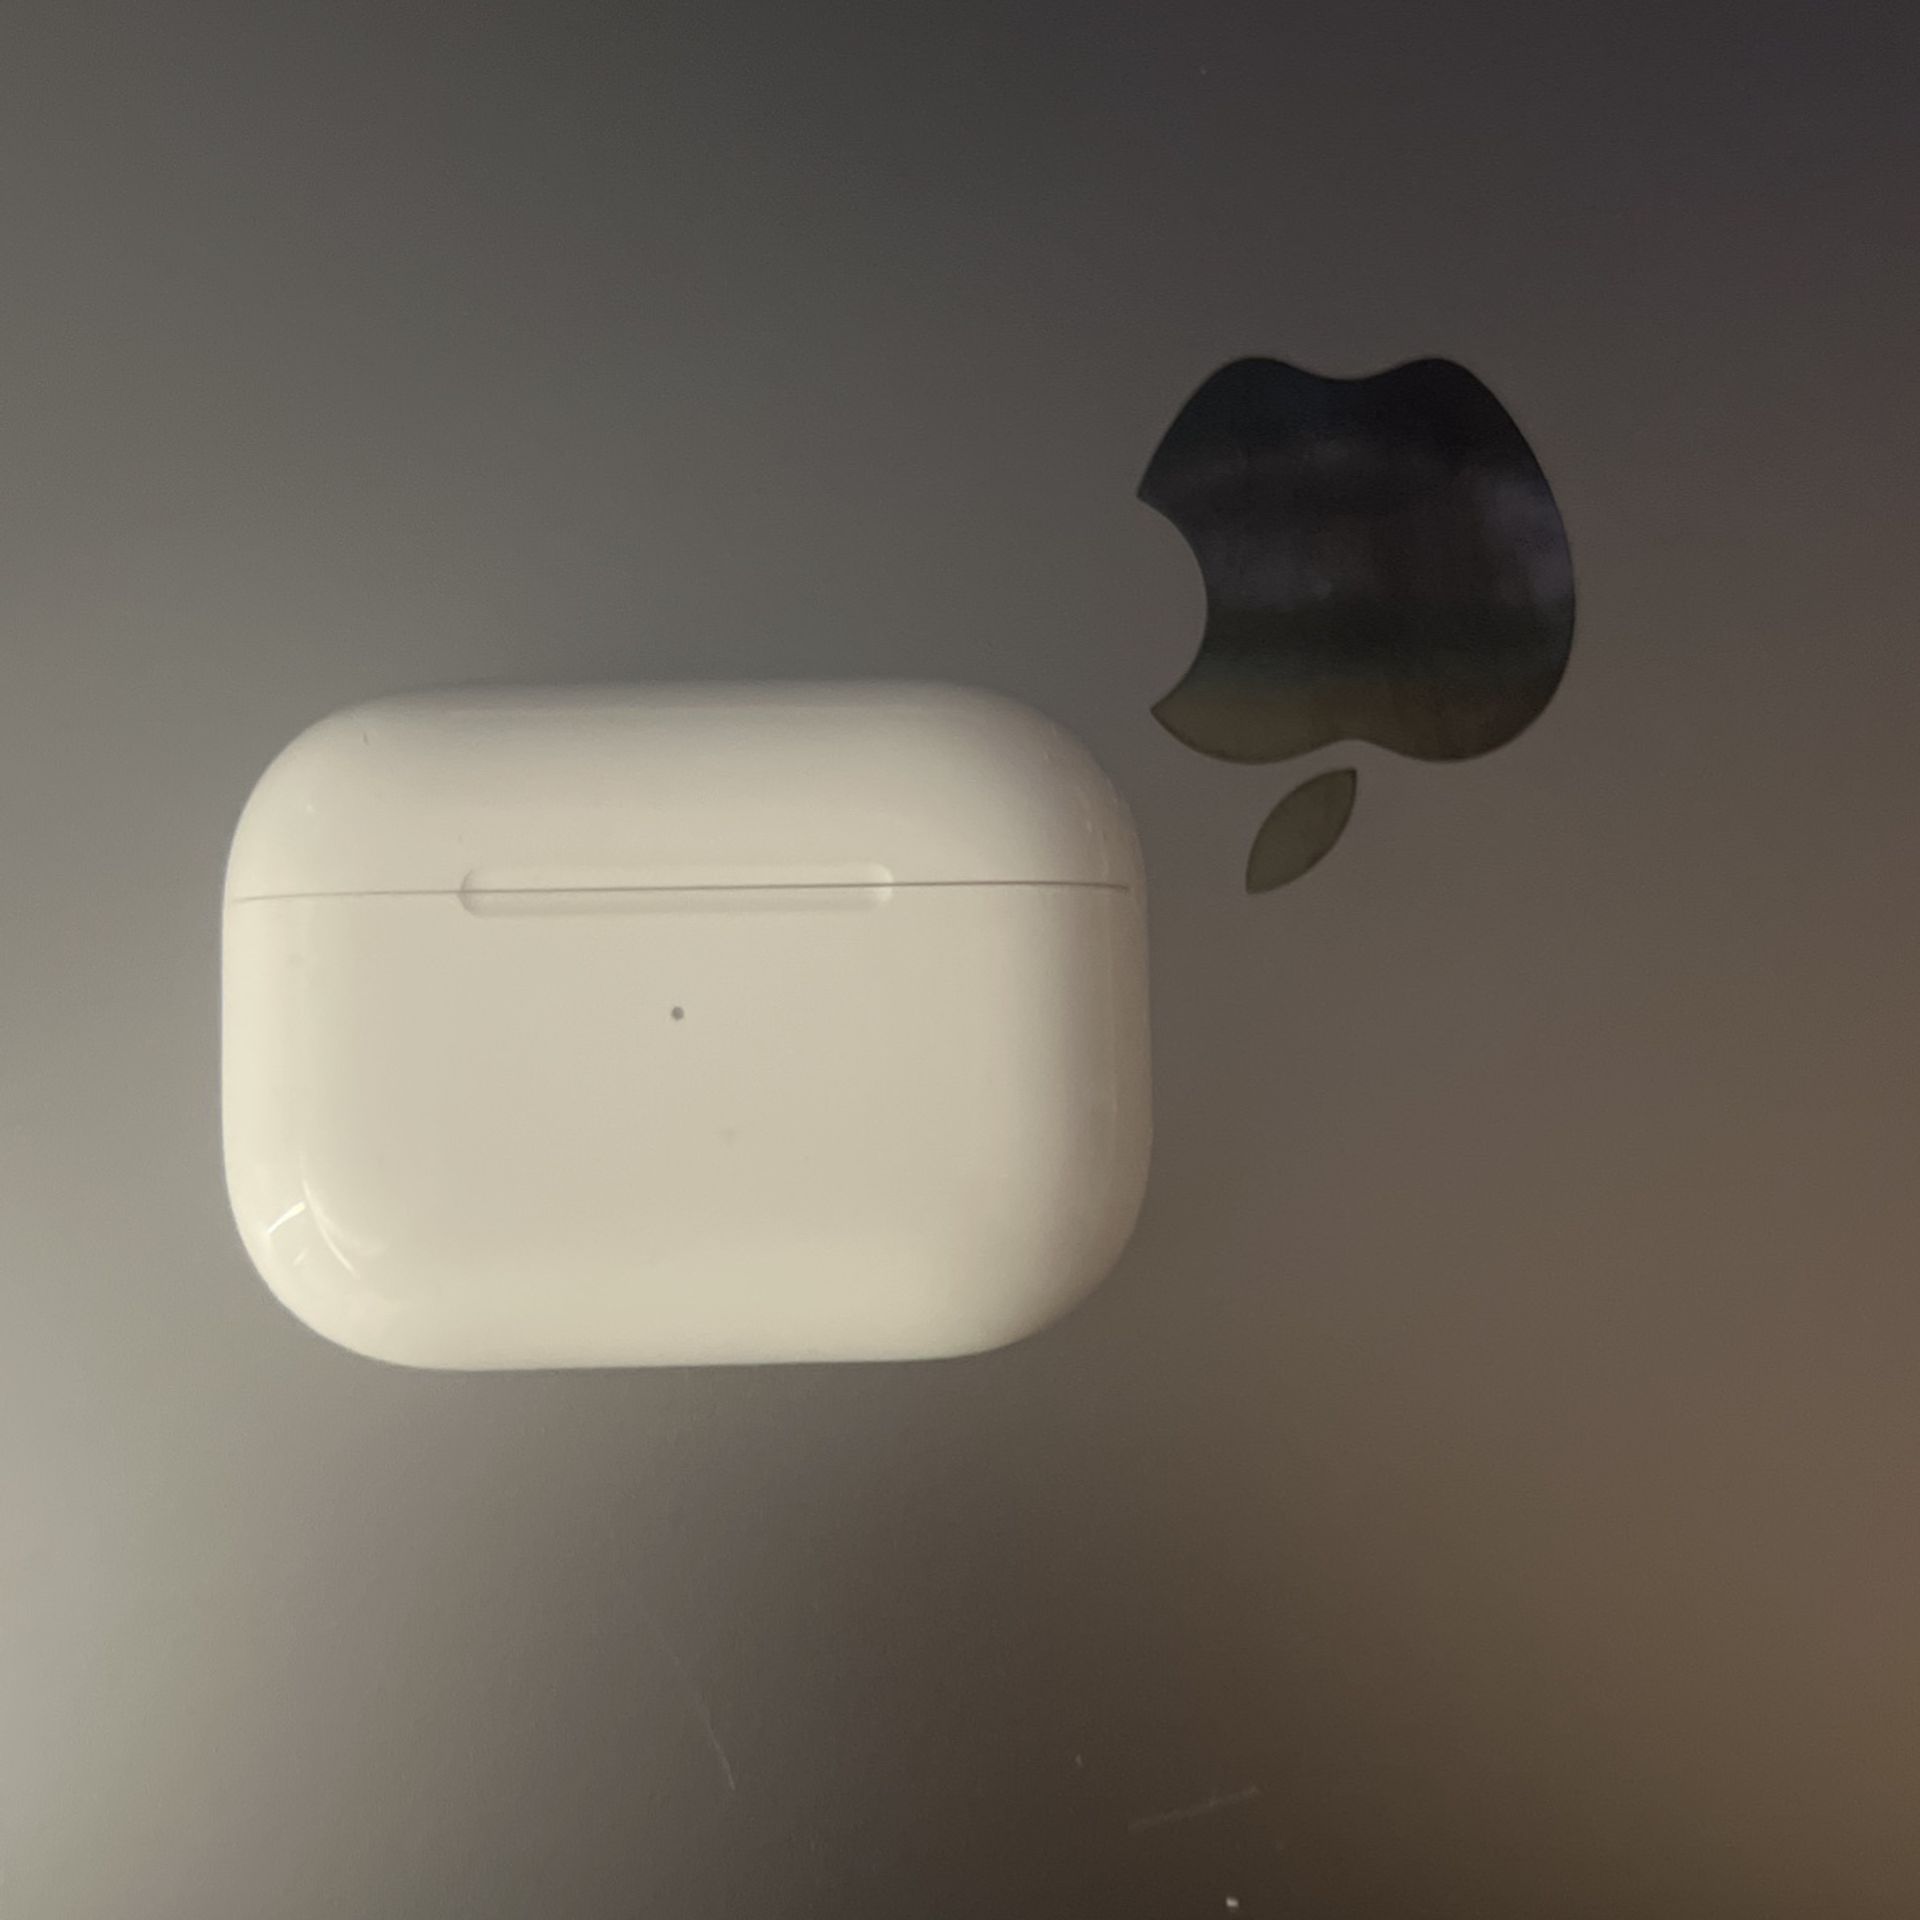 Apple AirPod Pro Charging Case 